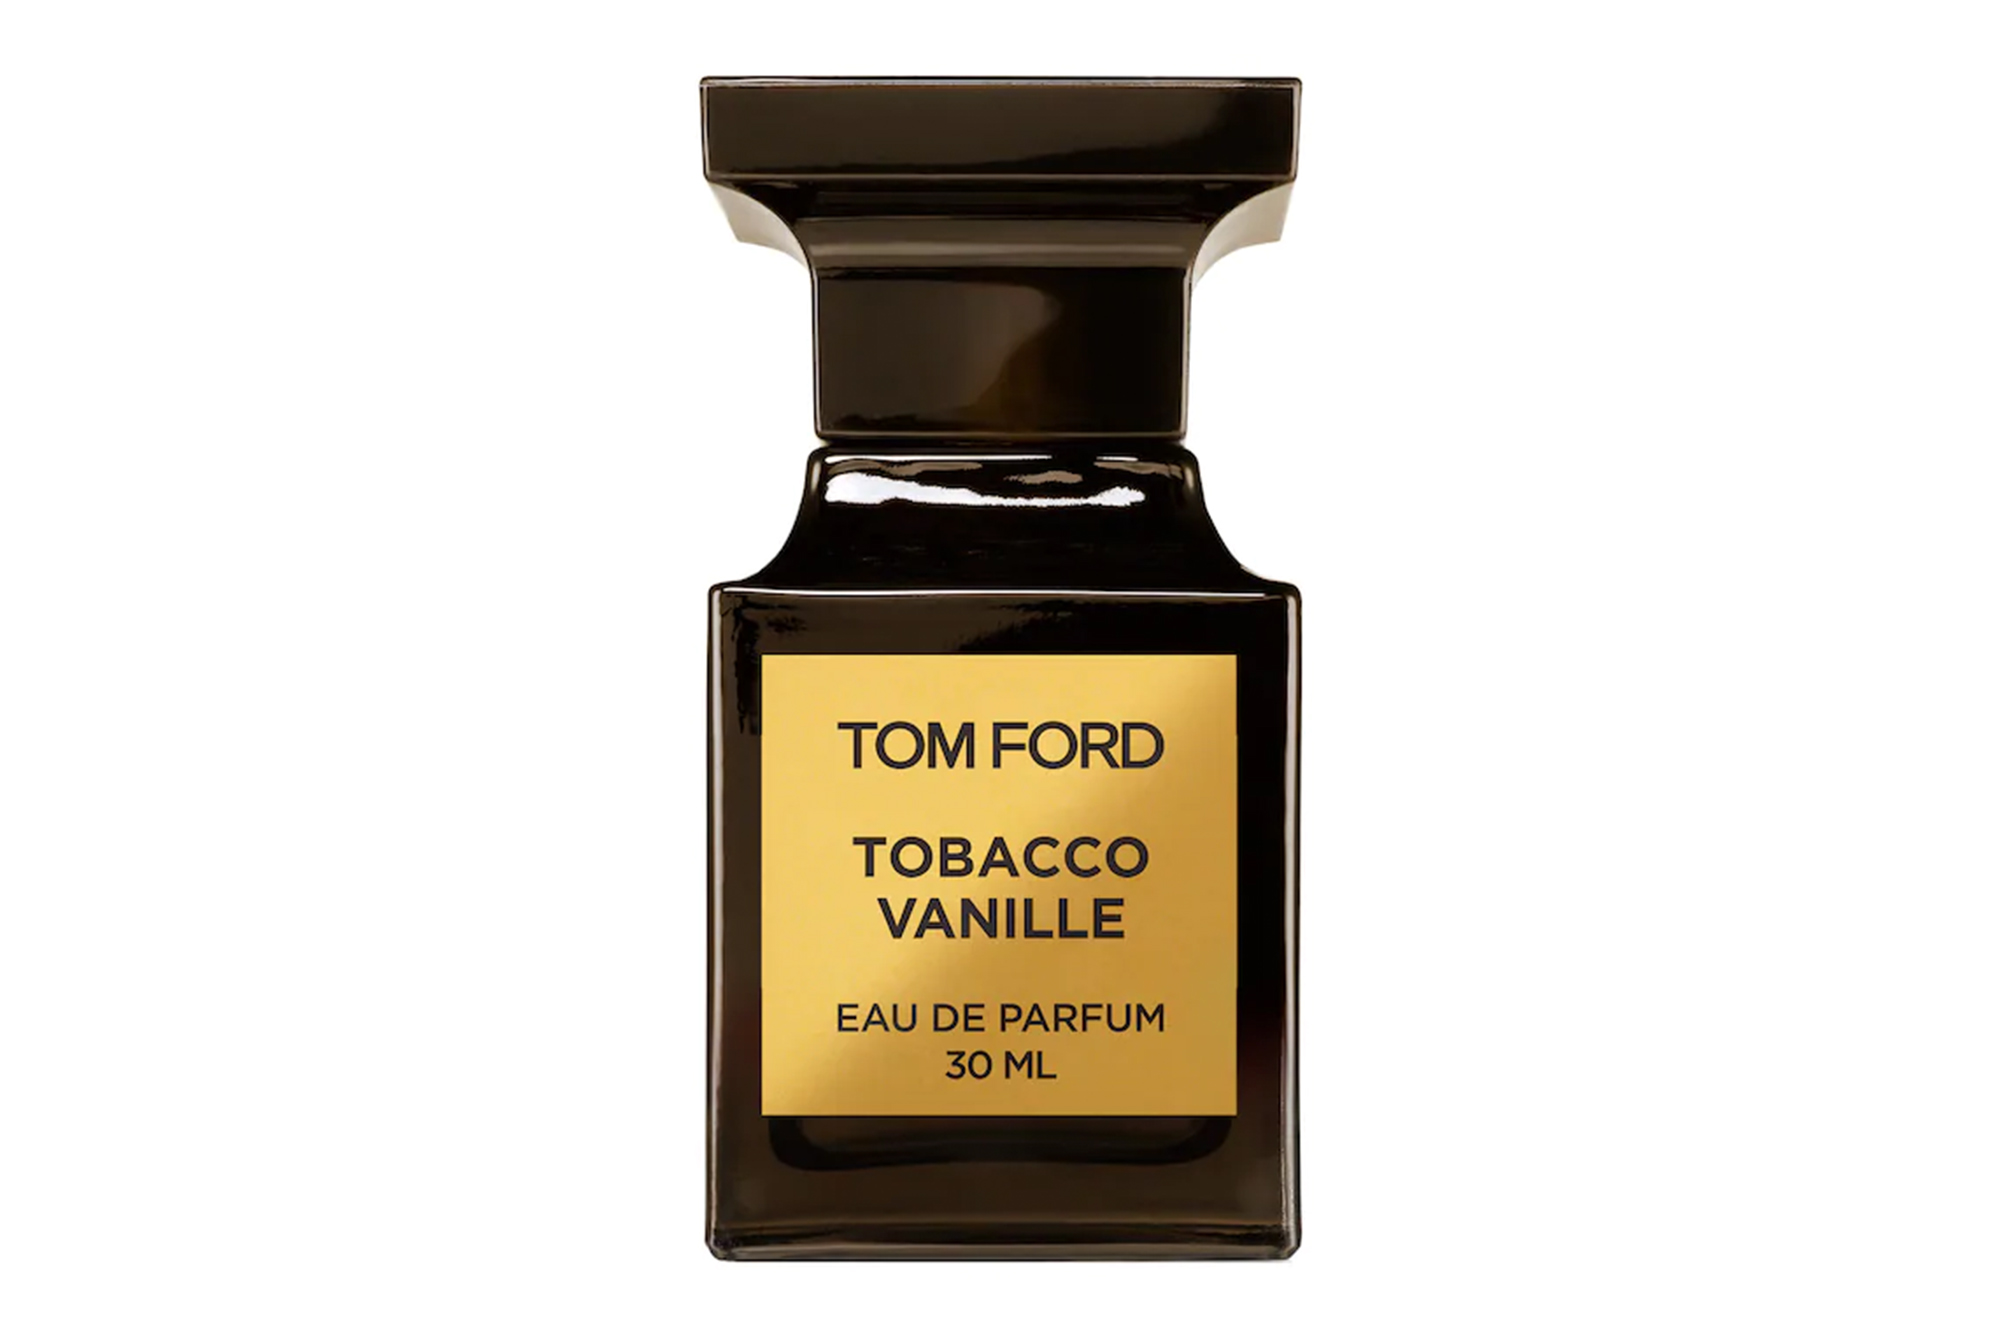 Tom Ford Tobacco Vanille bottle